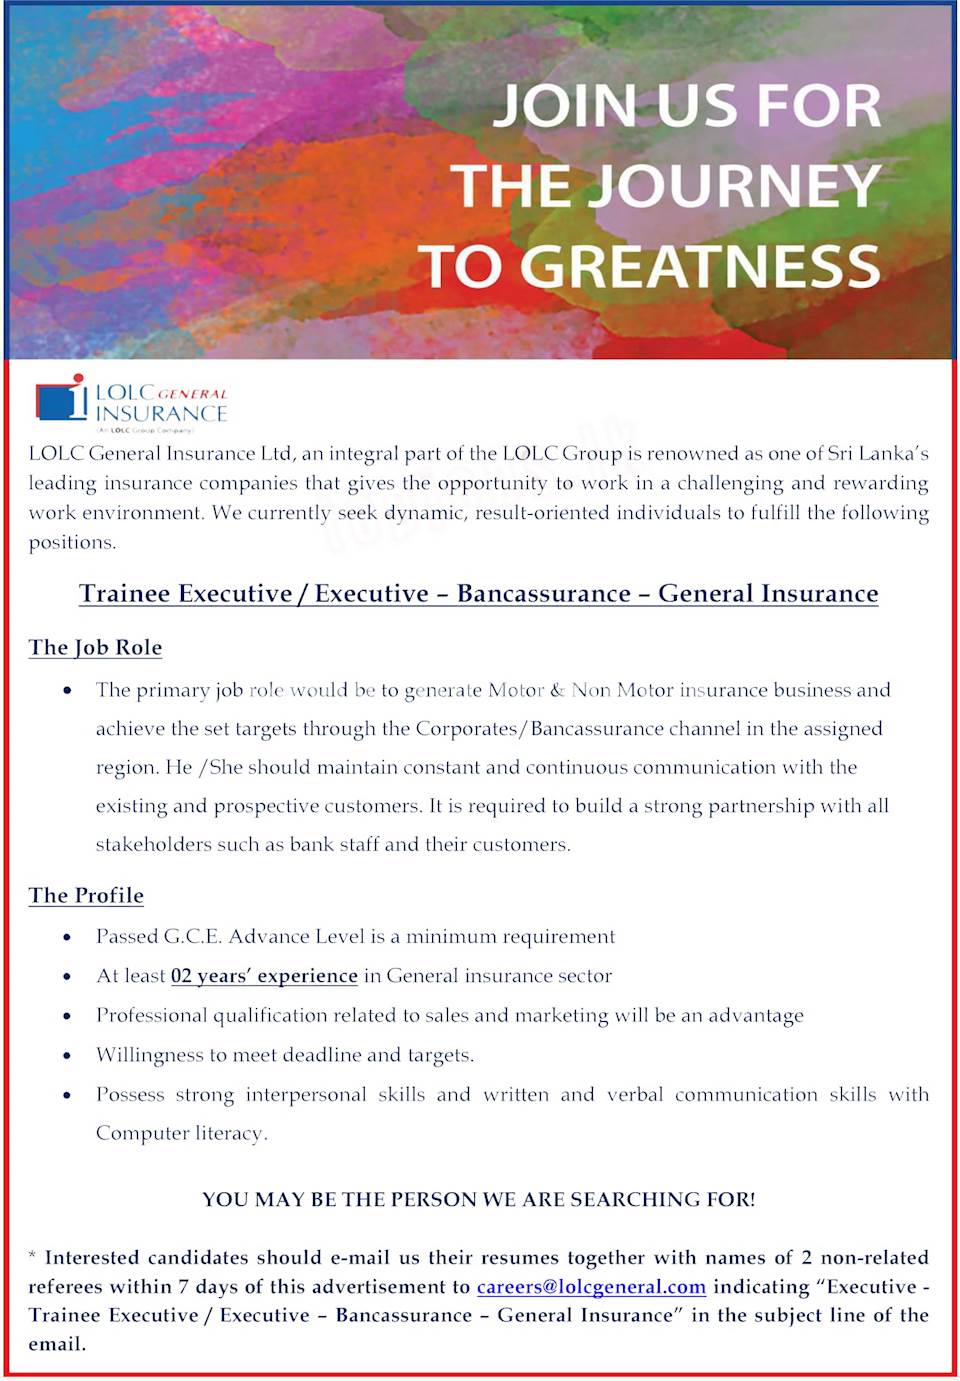 Trainee Executive / Executive - Bancassurance - General Insurance